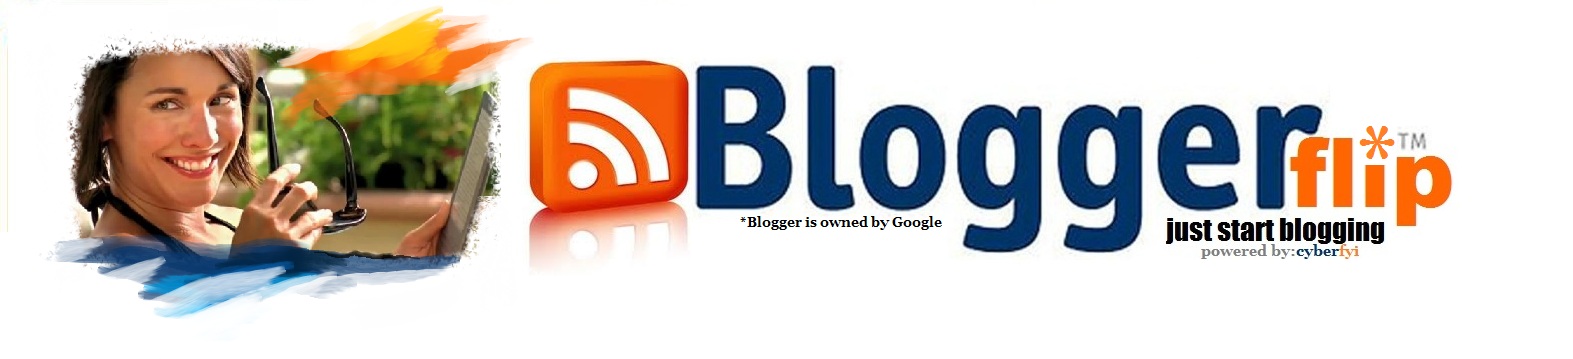 Bloggerflip.com